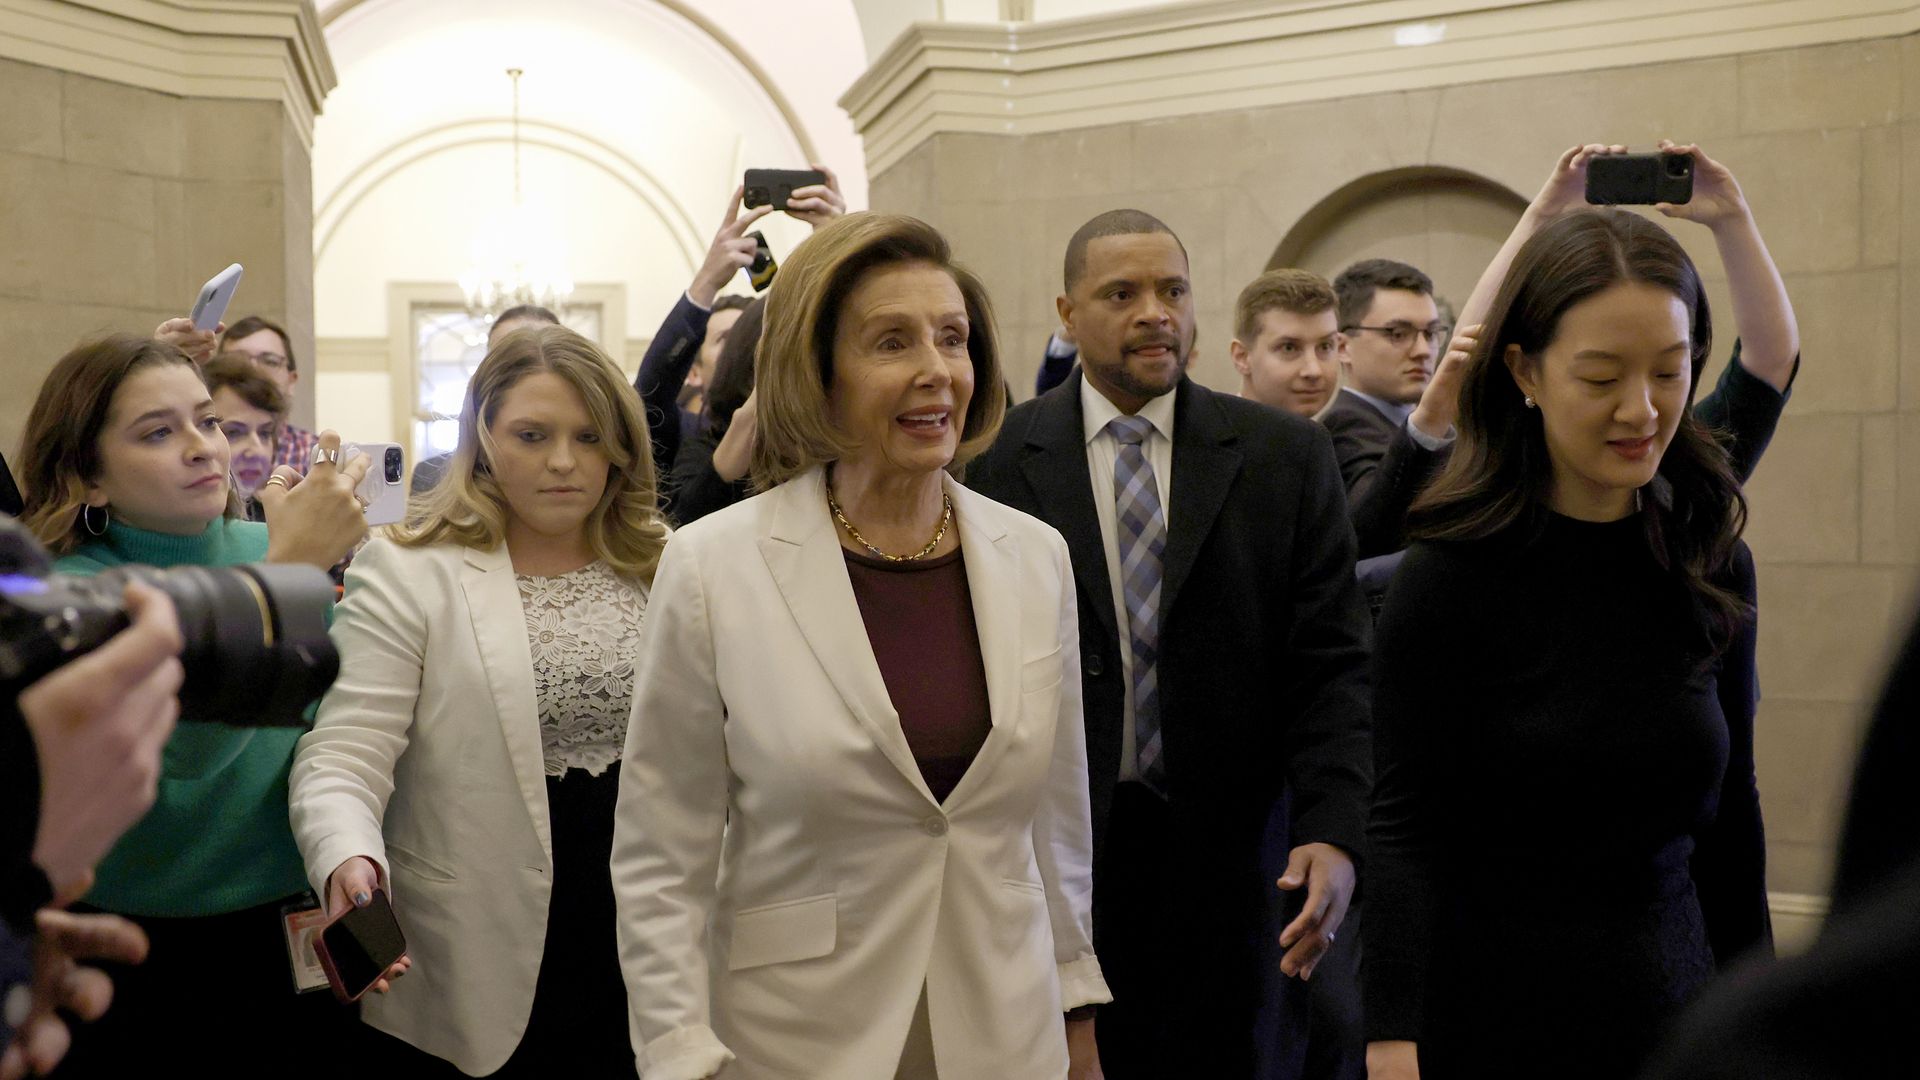 ouse Speaker Nancy Pelosi (D-CA) arrives to the U.S. Capitol Building on November 17, 2022 in Washington, DC